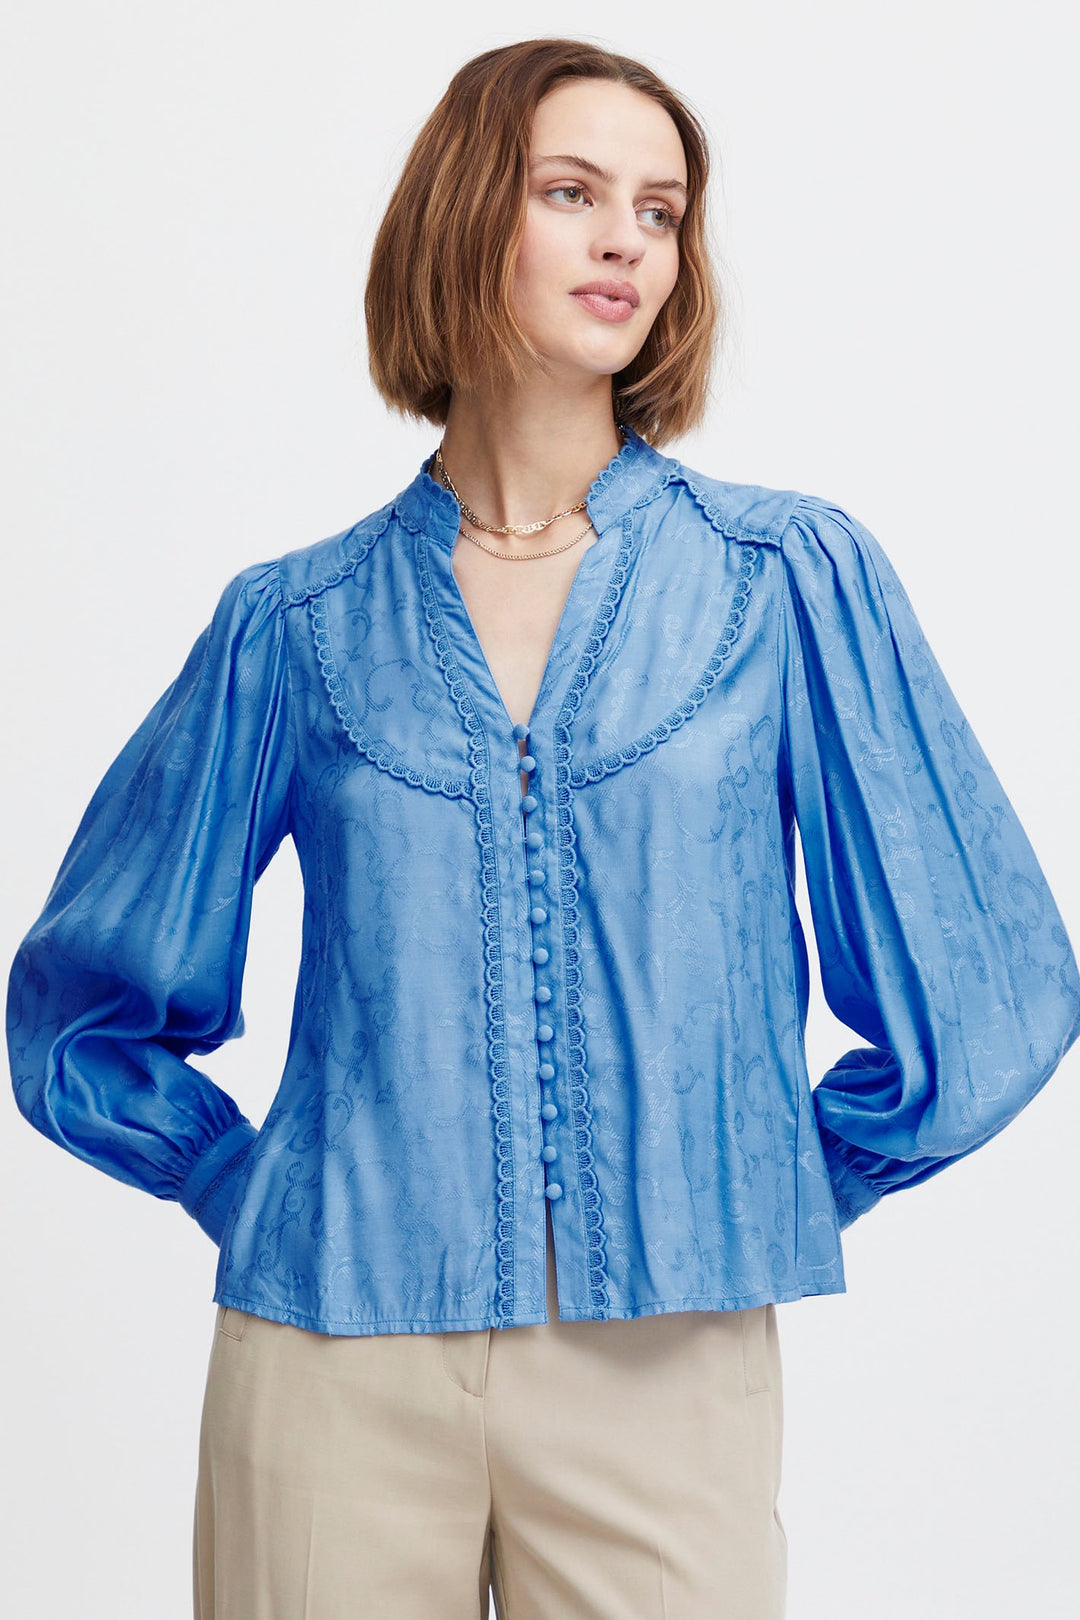 Atelier Reve 20120201 IRLOWLY SH Marina Blue Shirt Top